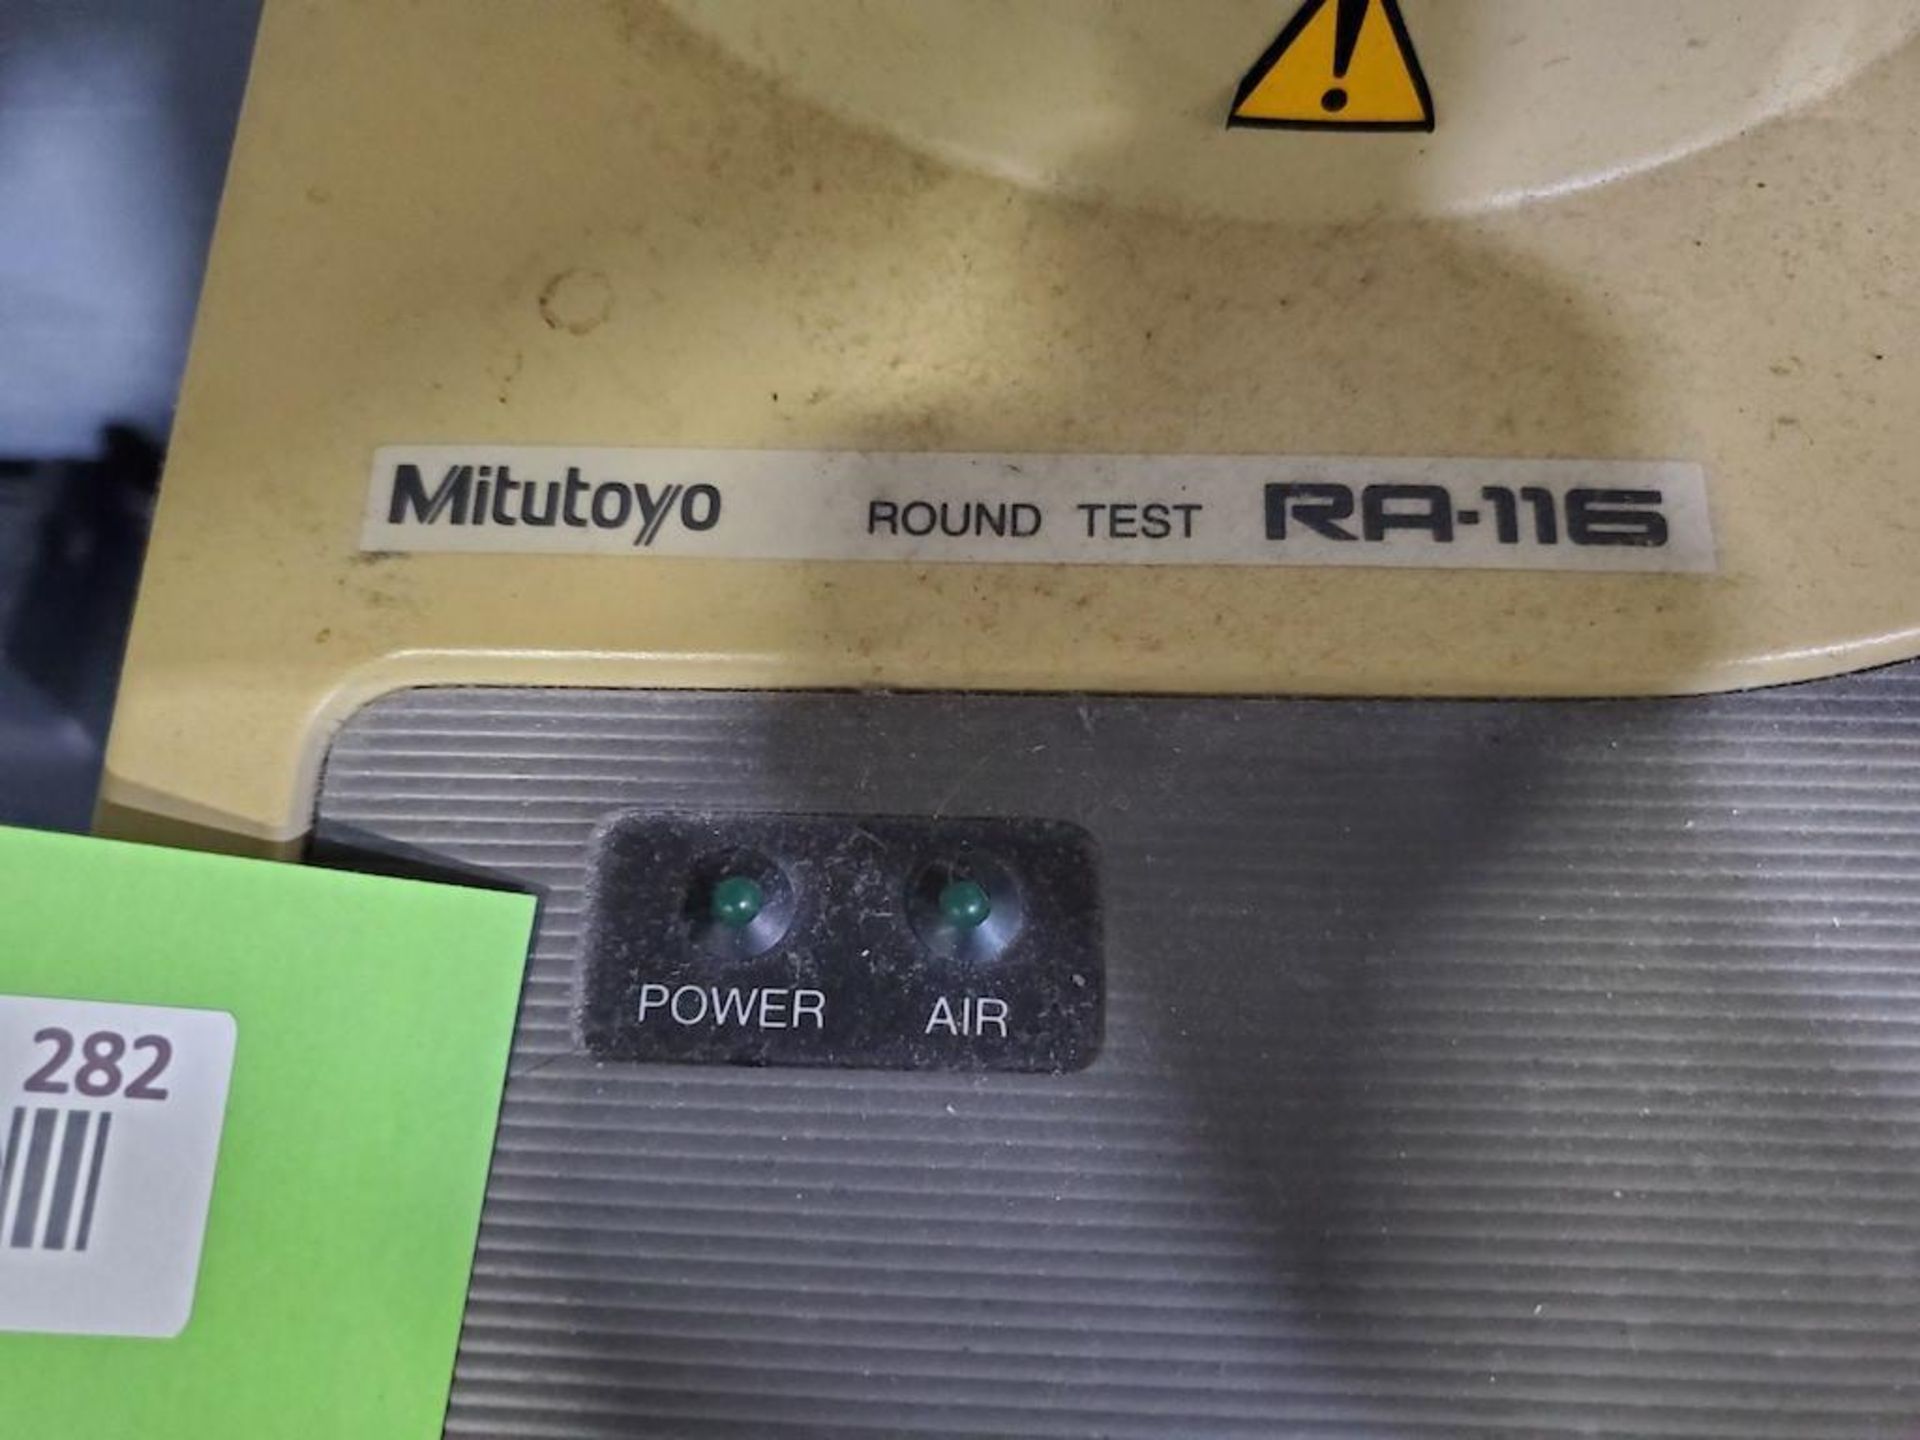 MITUTOYO CONTRACER CV-500 CONTOUR MEASURING INSTRUMENT, MITUTOYO ROUND TEST MACHINE MODEL RA-116, - Image 5 of 7